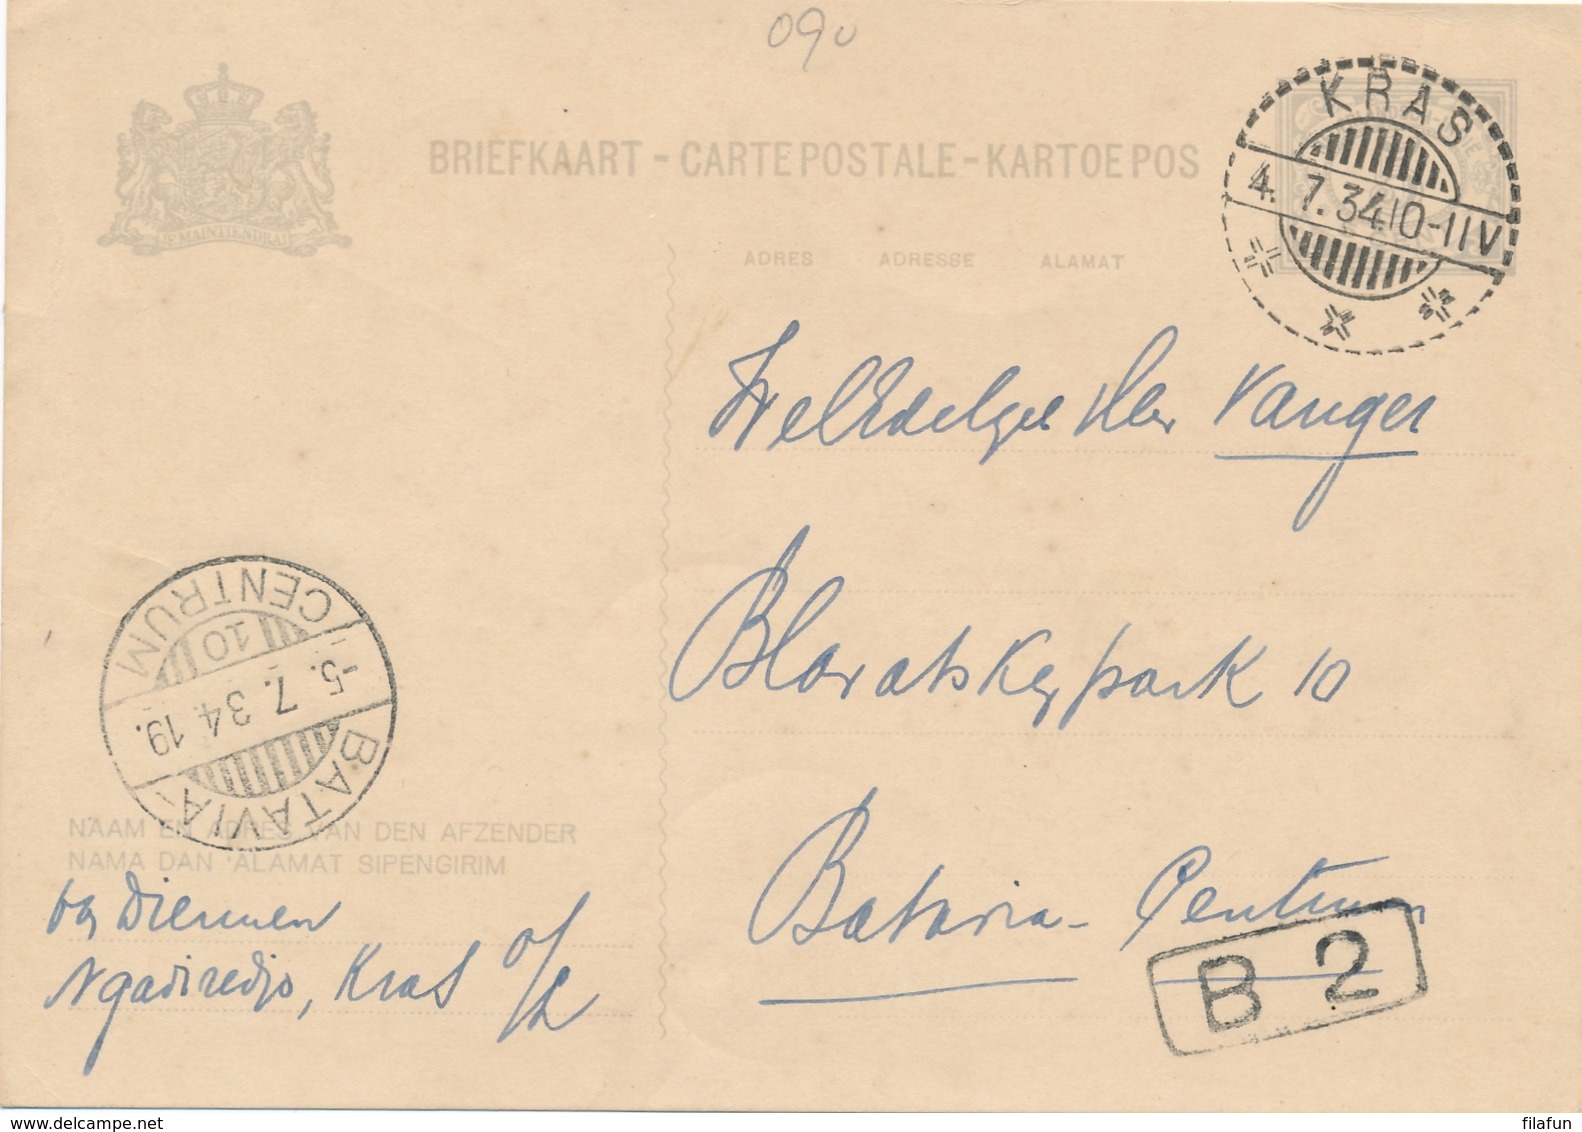 Nederlands Indië - 1934 - 5 Cent Cijfer, Briefkaart G54a Van LB KRAS Naar BataviaCentrum/10 - Niederländisch-Indien